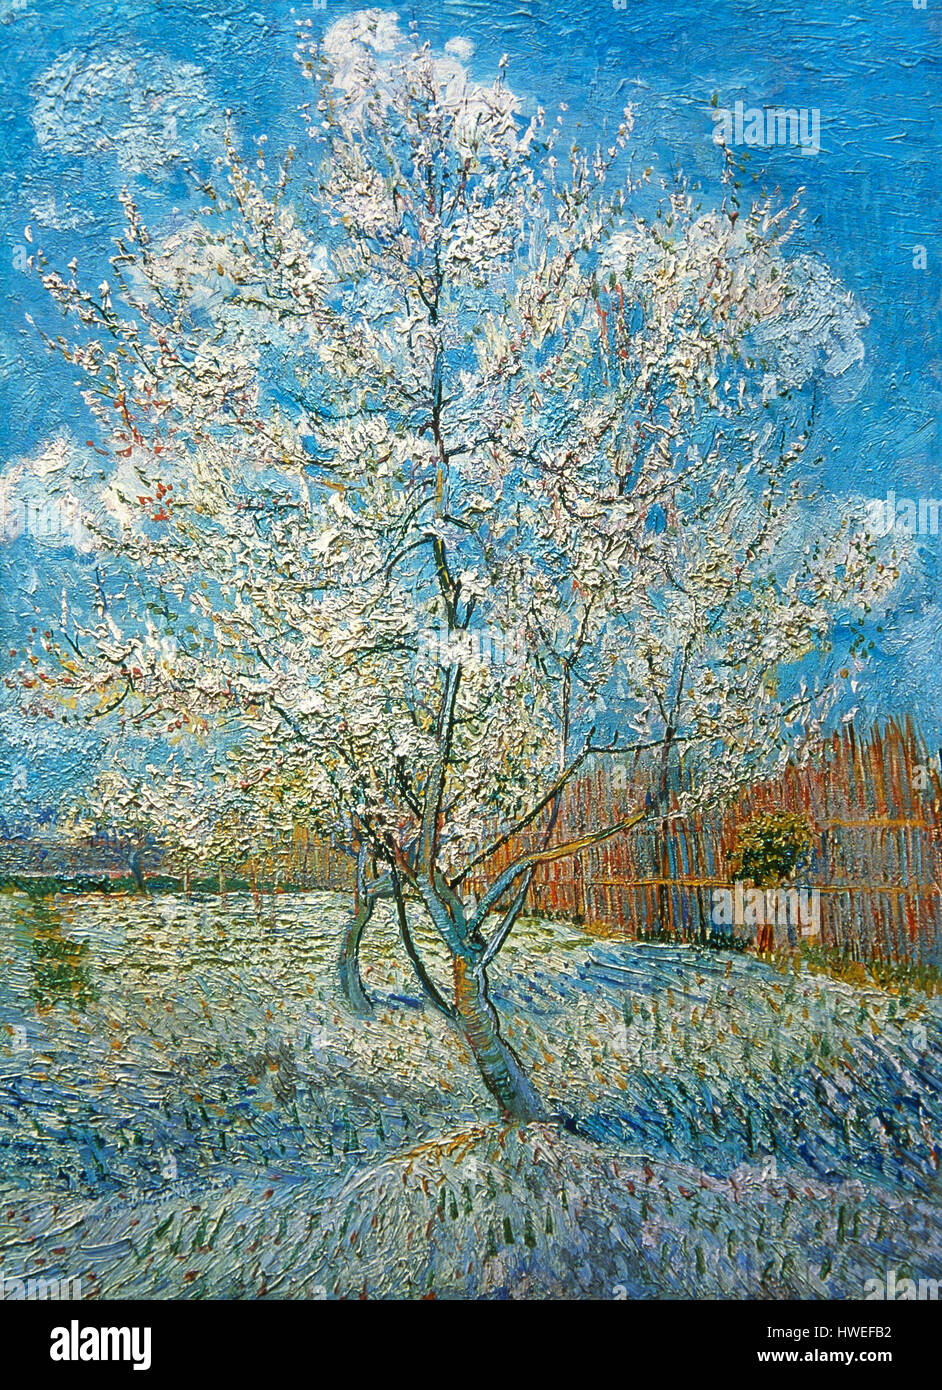 Vincent Van Gogh (1853-1890). Dutch Post-Impressionist pittore. Pesco, 1888. Vincent Van Gogh Museum. Amsterdam. Holland. Foto Stock